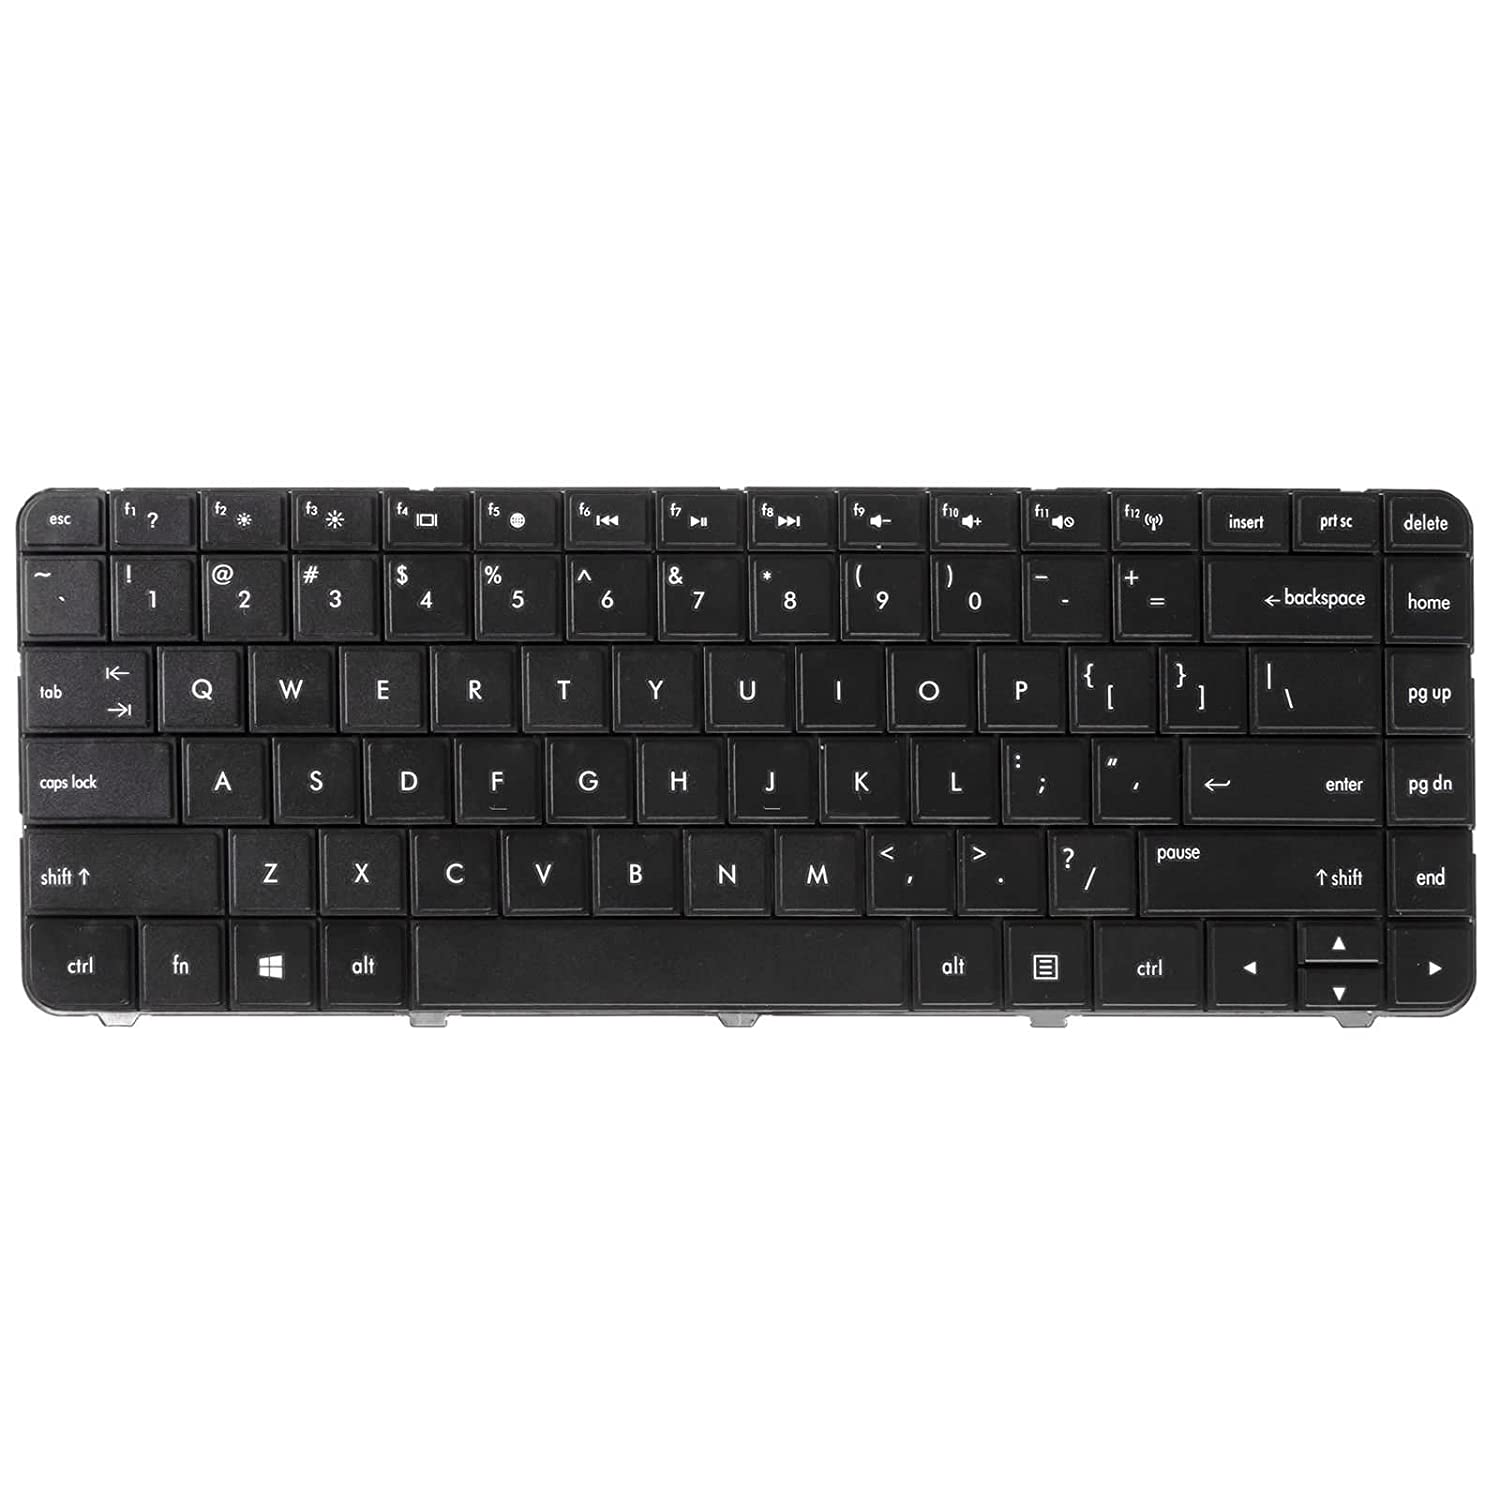 Generic Keyboard for HP Pavilion G4 1303AU Laptop